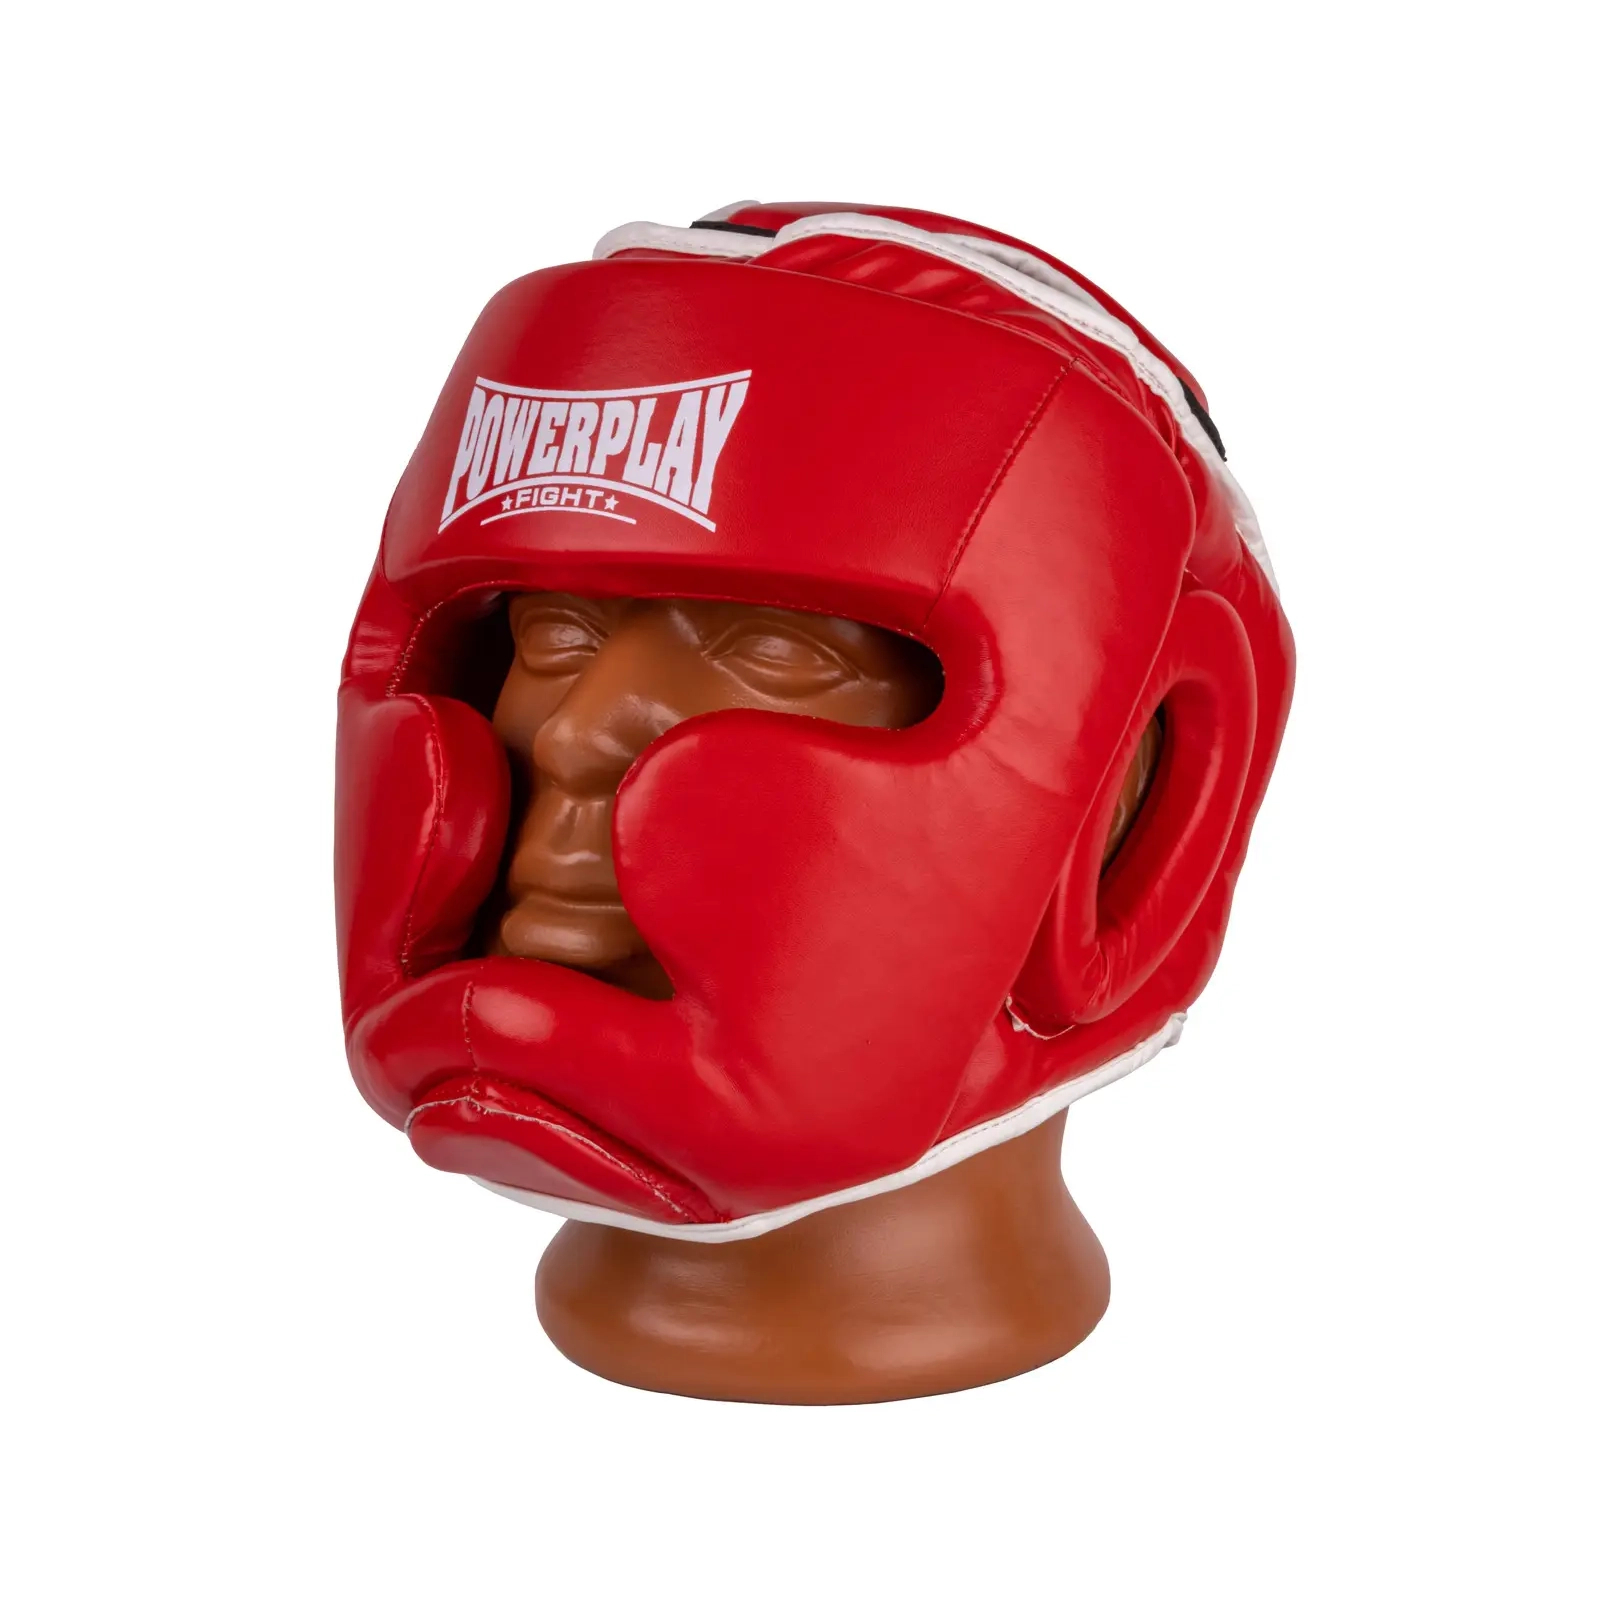 Боксерский шлем PowerPlay 3100 PU Чорно-зелений M (PP_3100_M_Black/Green) изображение 2